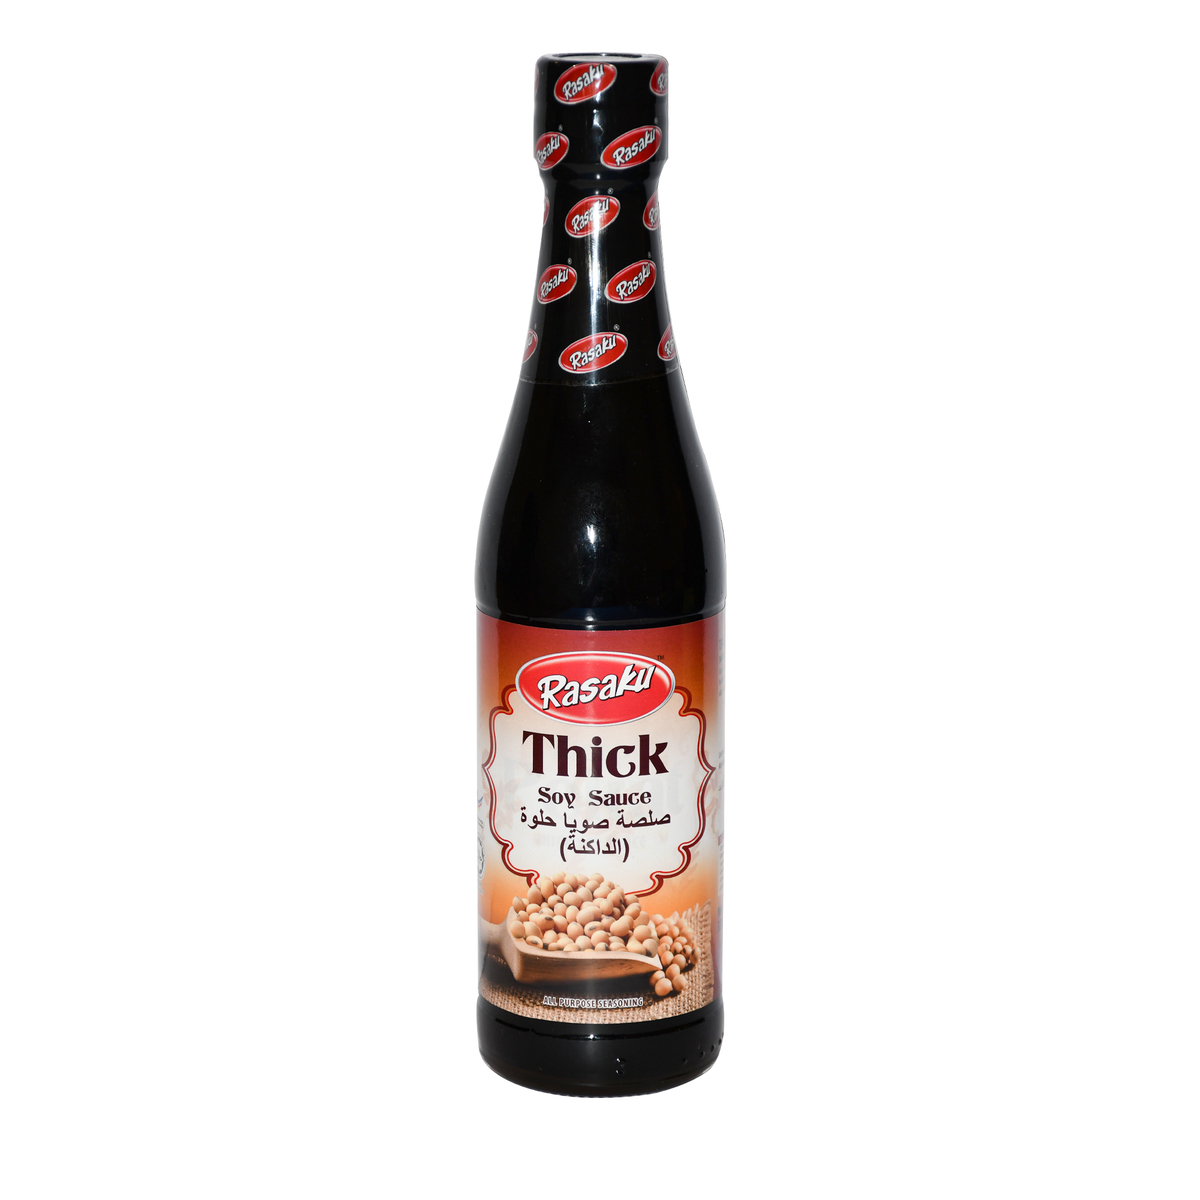 Rasaku Thick Soy Sauce 330 ml